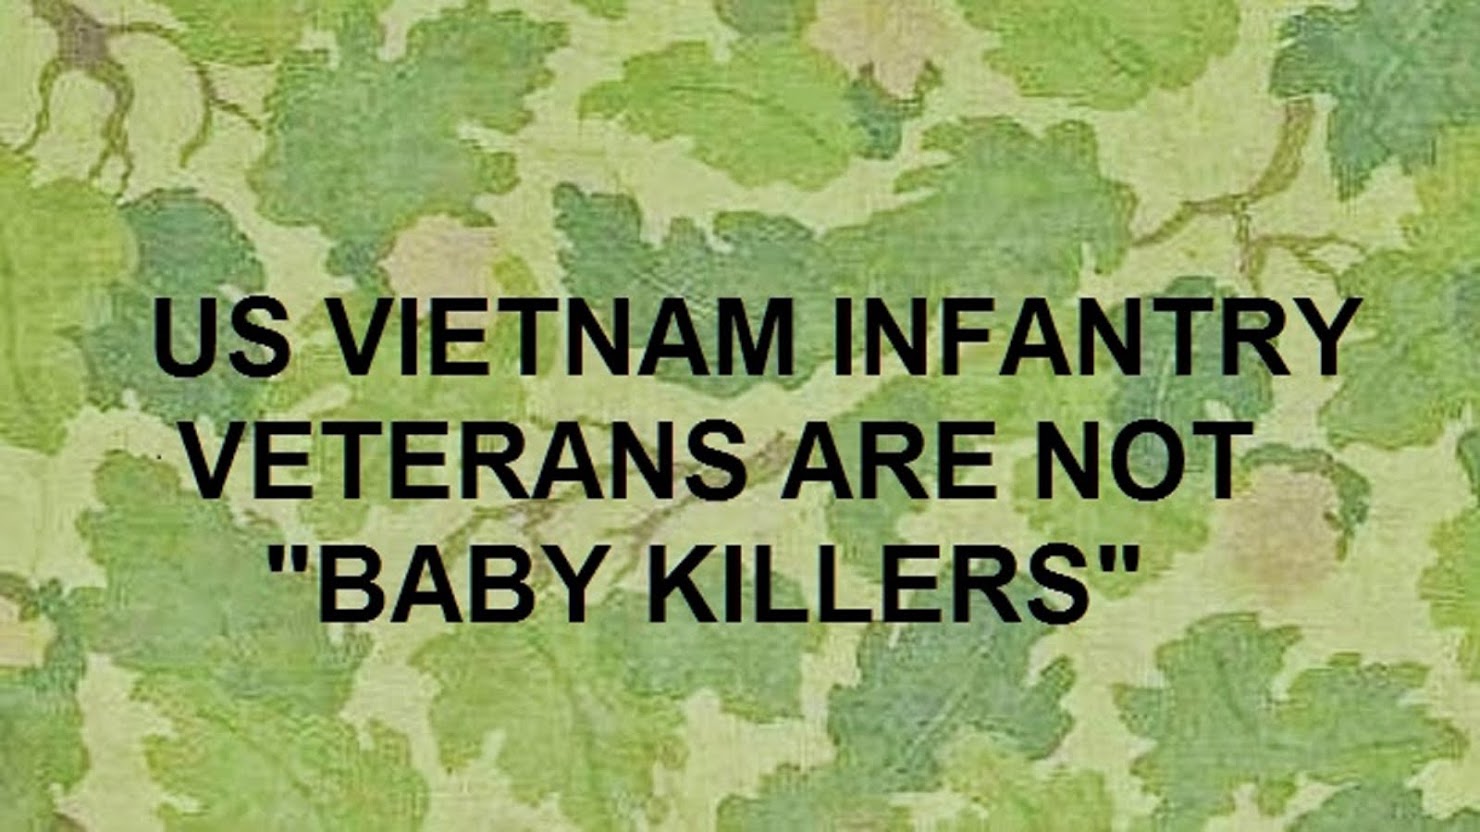 US VIETNAM INFANTRY VETERANS ARE NOT BABY KILLERS